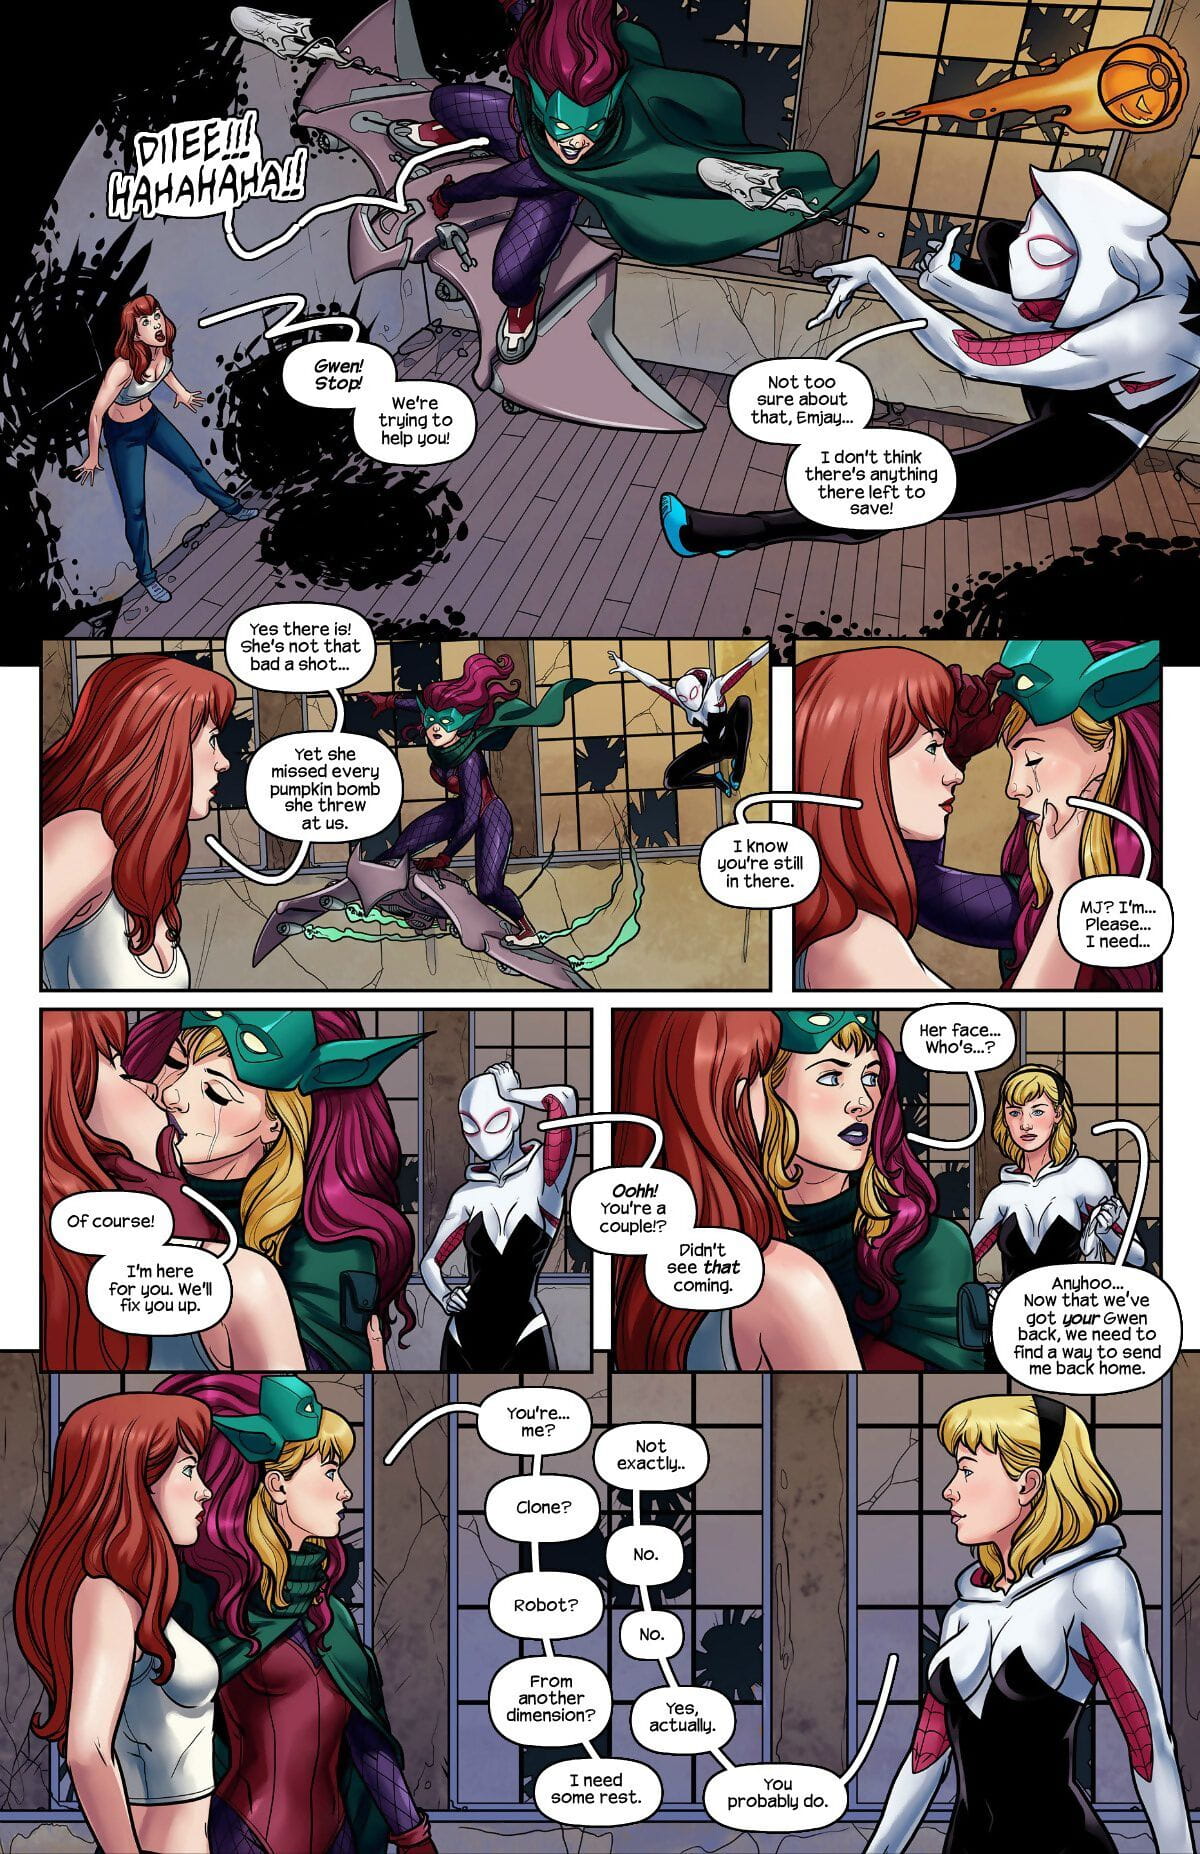 Tracy scops fantasma araña vs. Verde goblin page 1